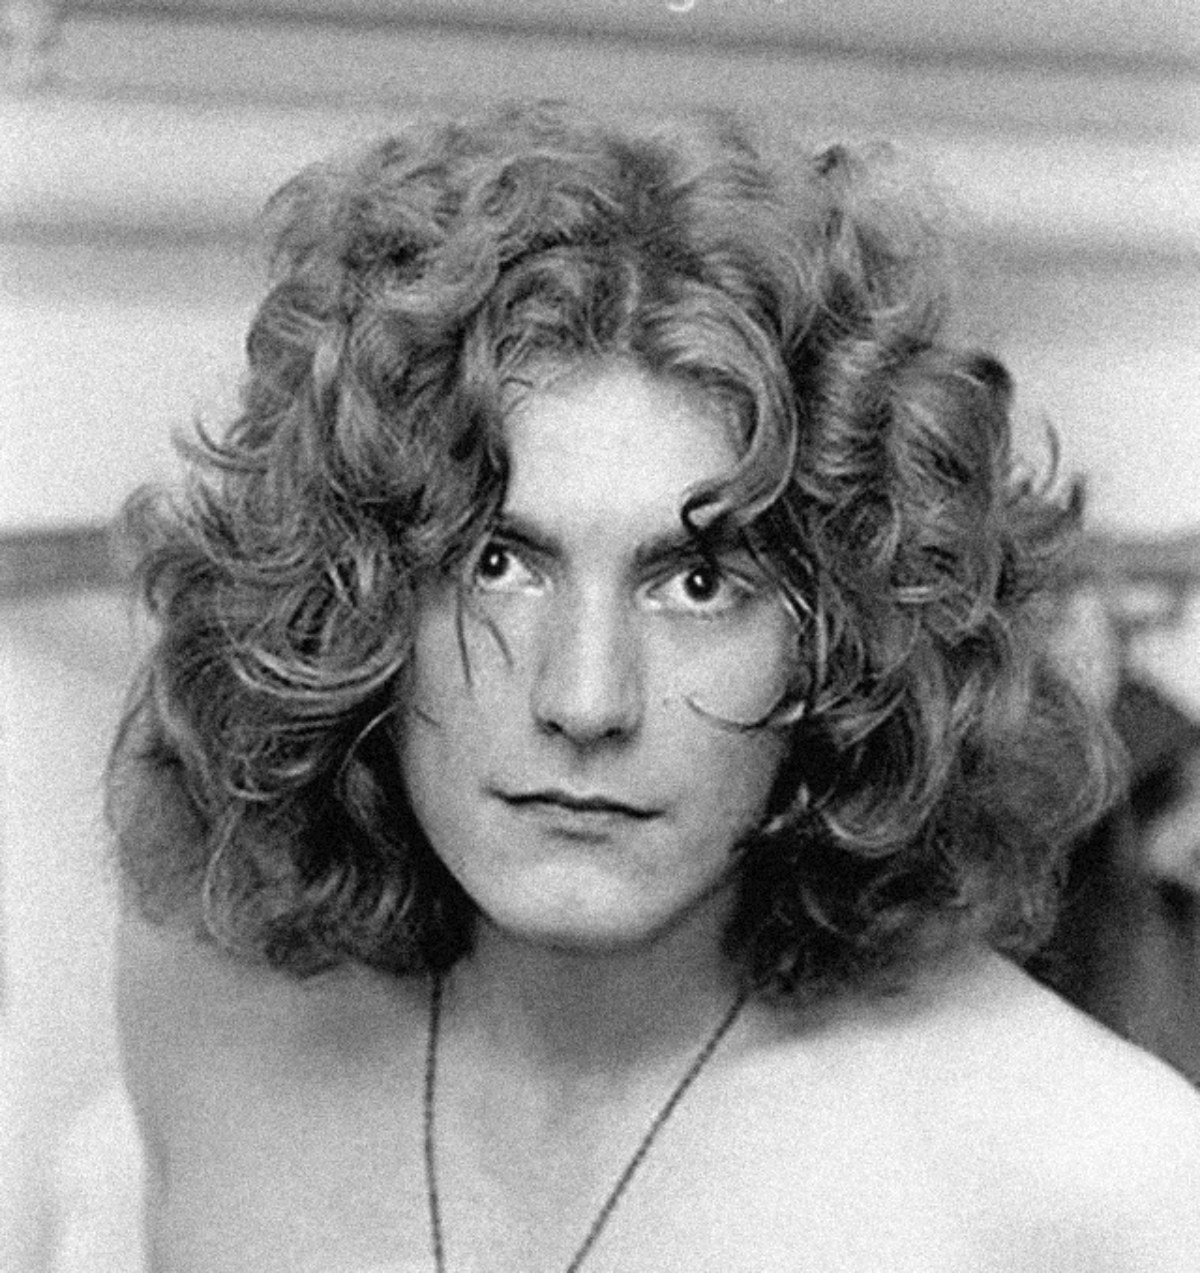 Robert Plant quando jovem...